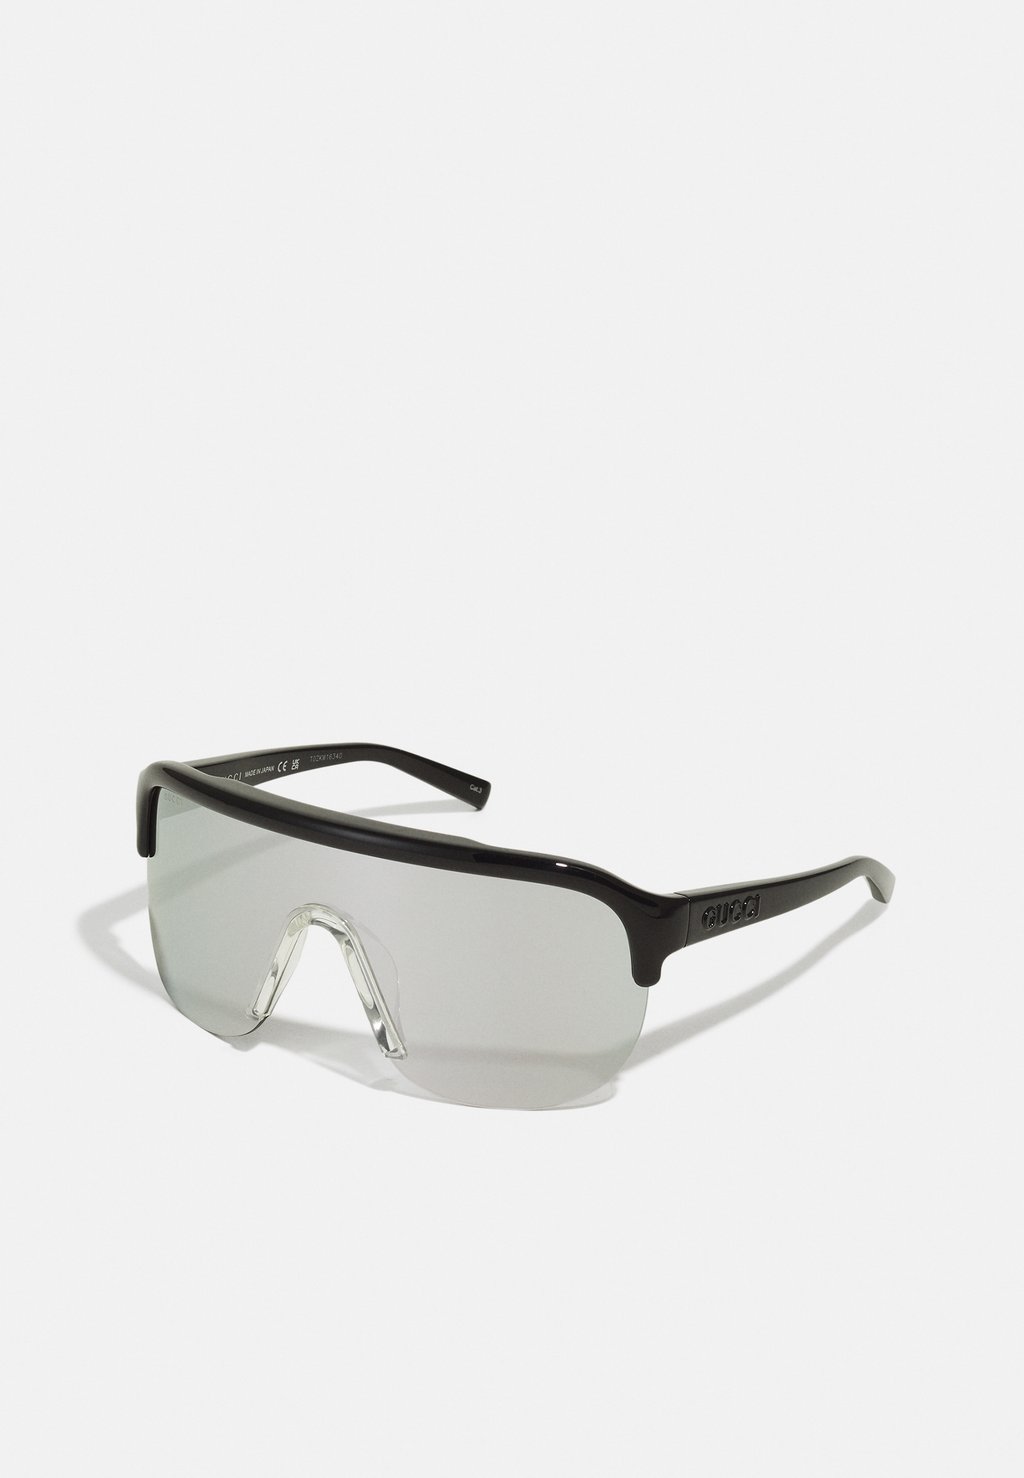 Солнцезащитные очки Unisex Gucci, цвет black/silver-coloured солнцезащитные очки unisex gucci цвет black silver coloured